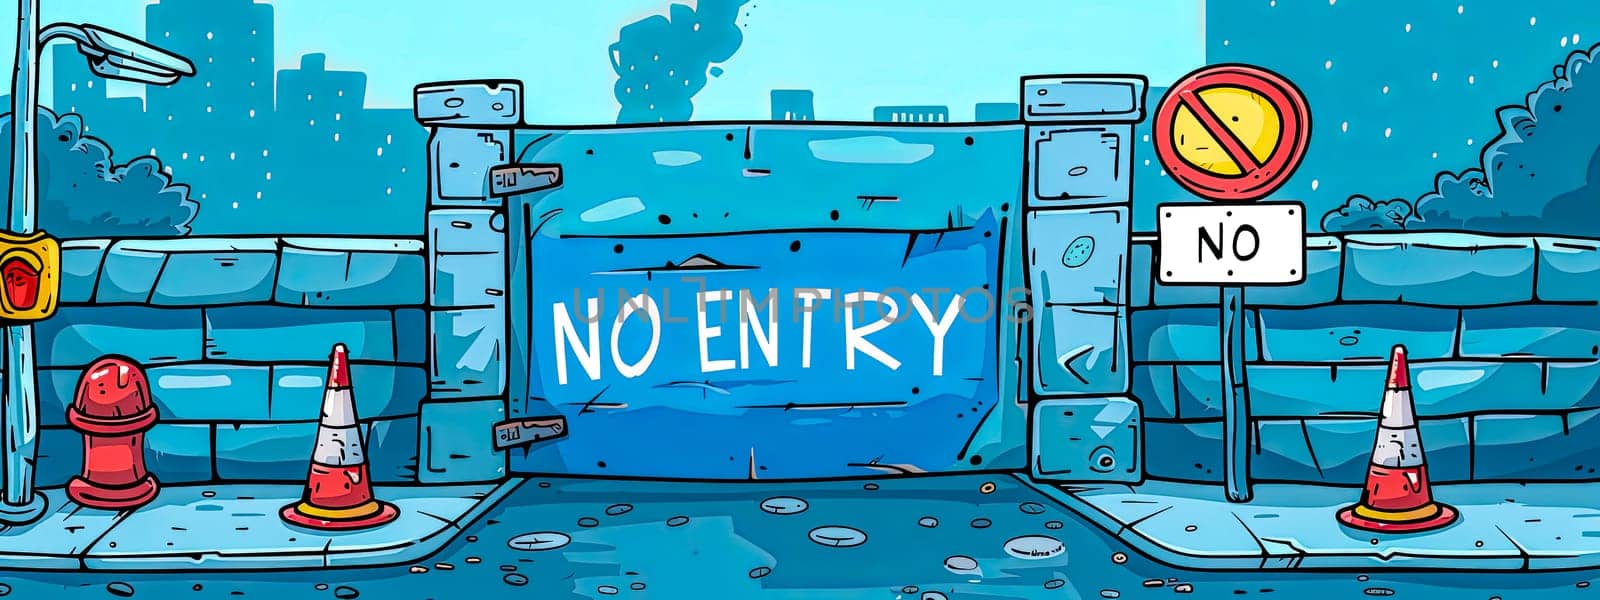 Cartoon illustration of no entry construction zone by Edophoto